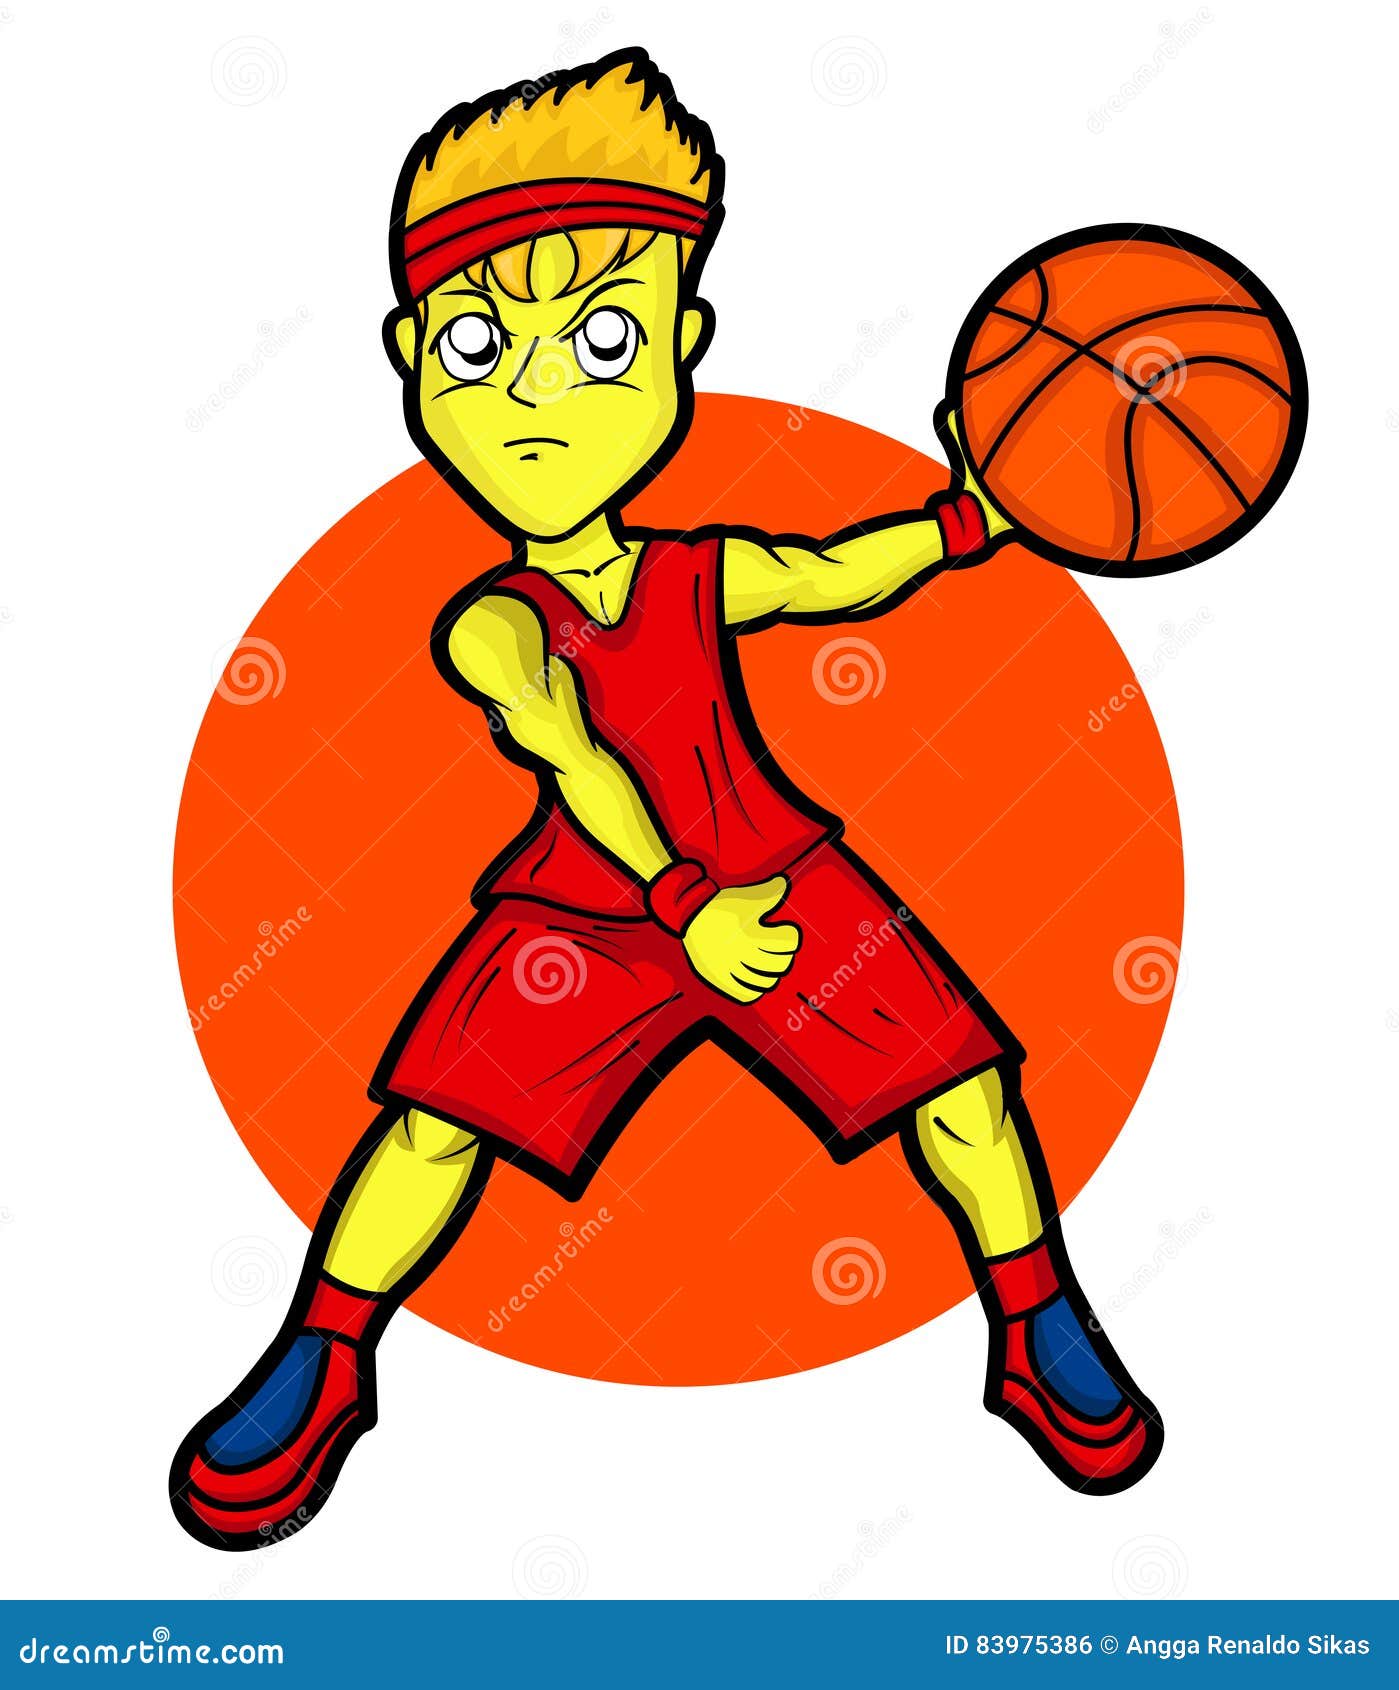 Young Basketball Player Cartoon Character Stock Vector - Illustration